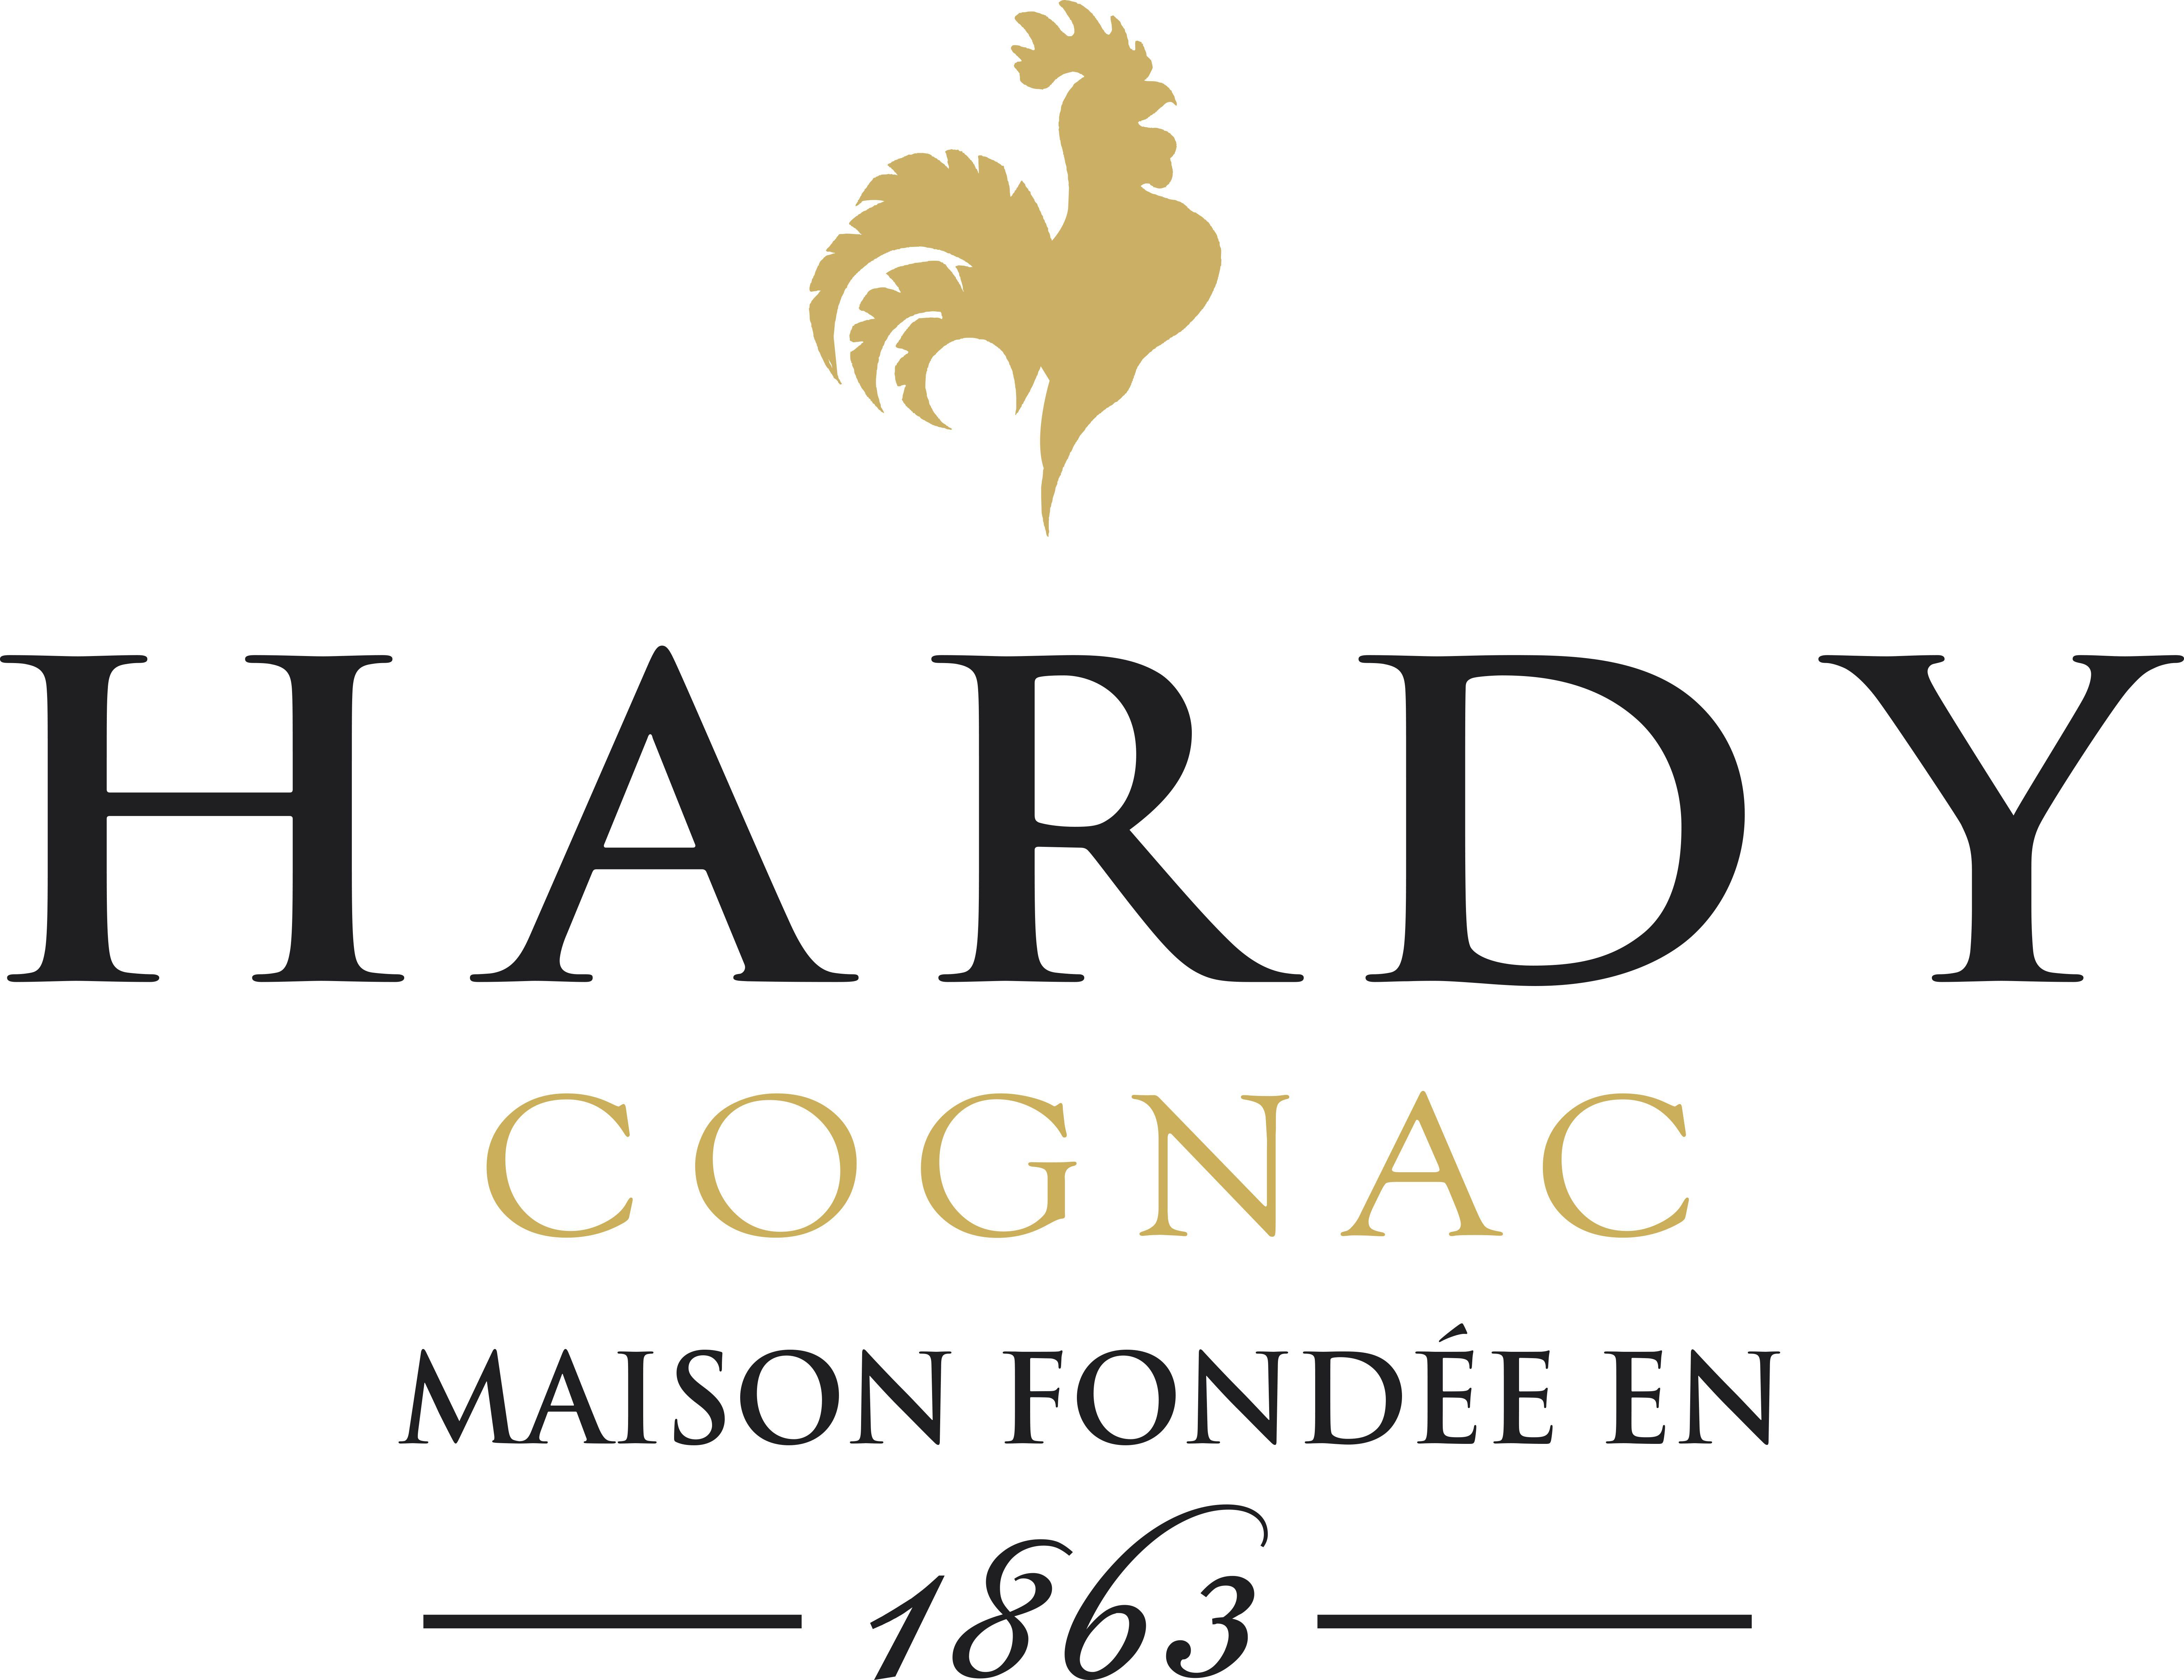 Congac Logo - An Evening Of Cognac And Chocolate Française Mpls St Paul